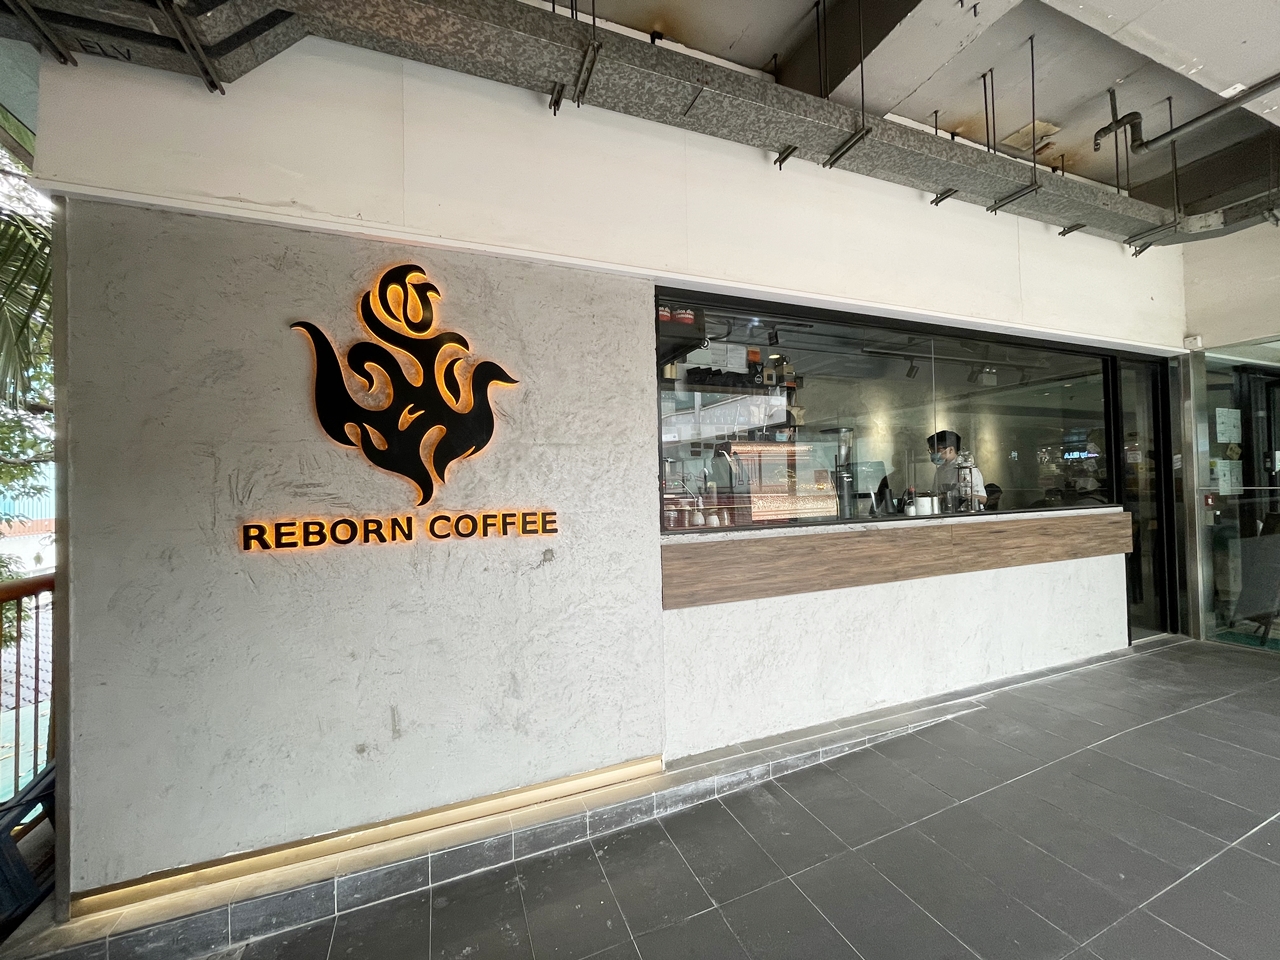 Location – Reborn Coffee